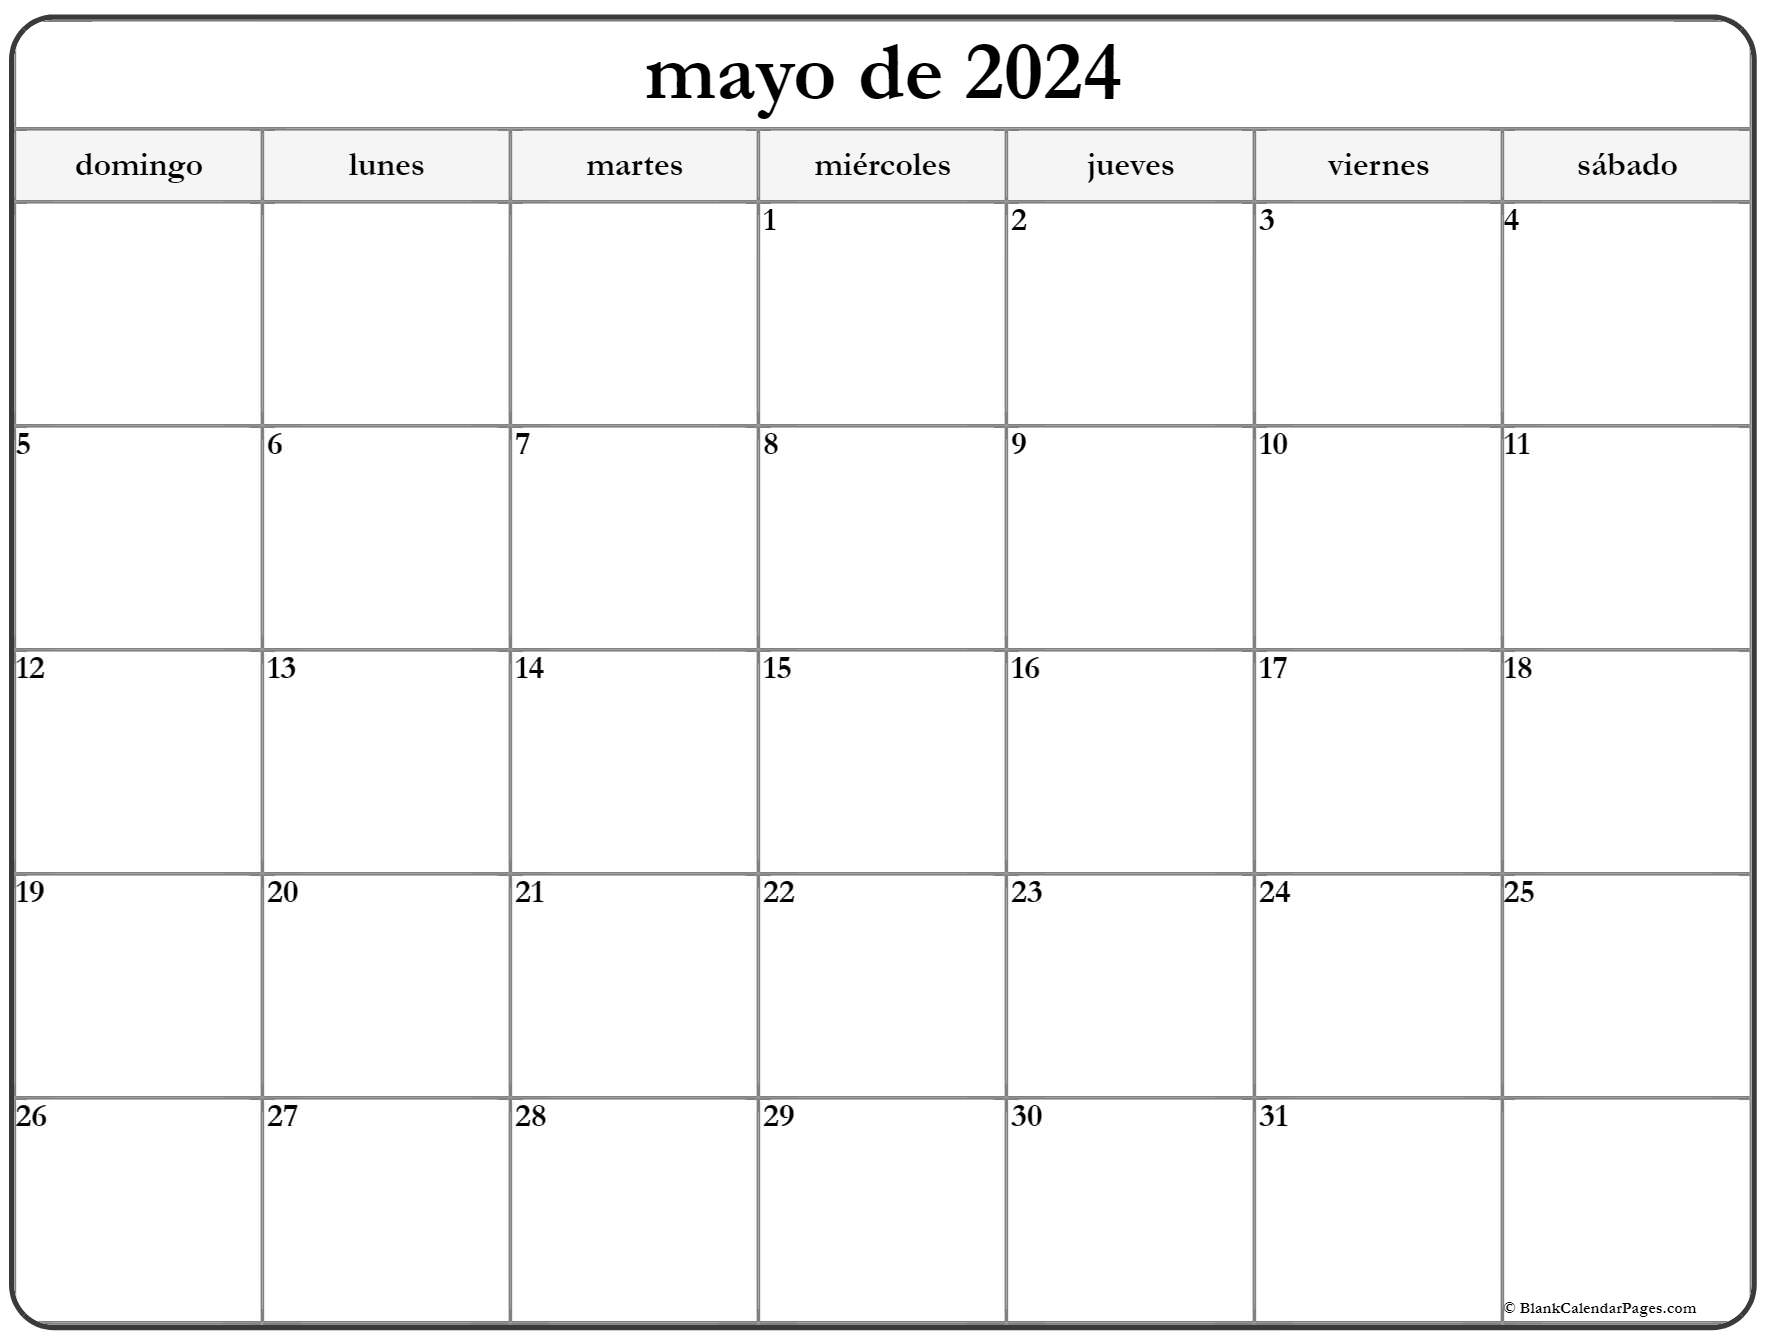 mayo de 2024 calendario gratis Calendario mayo